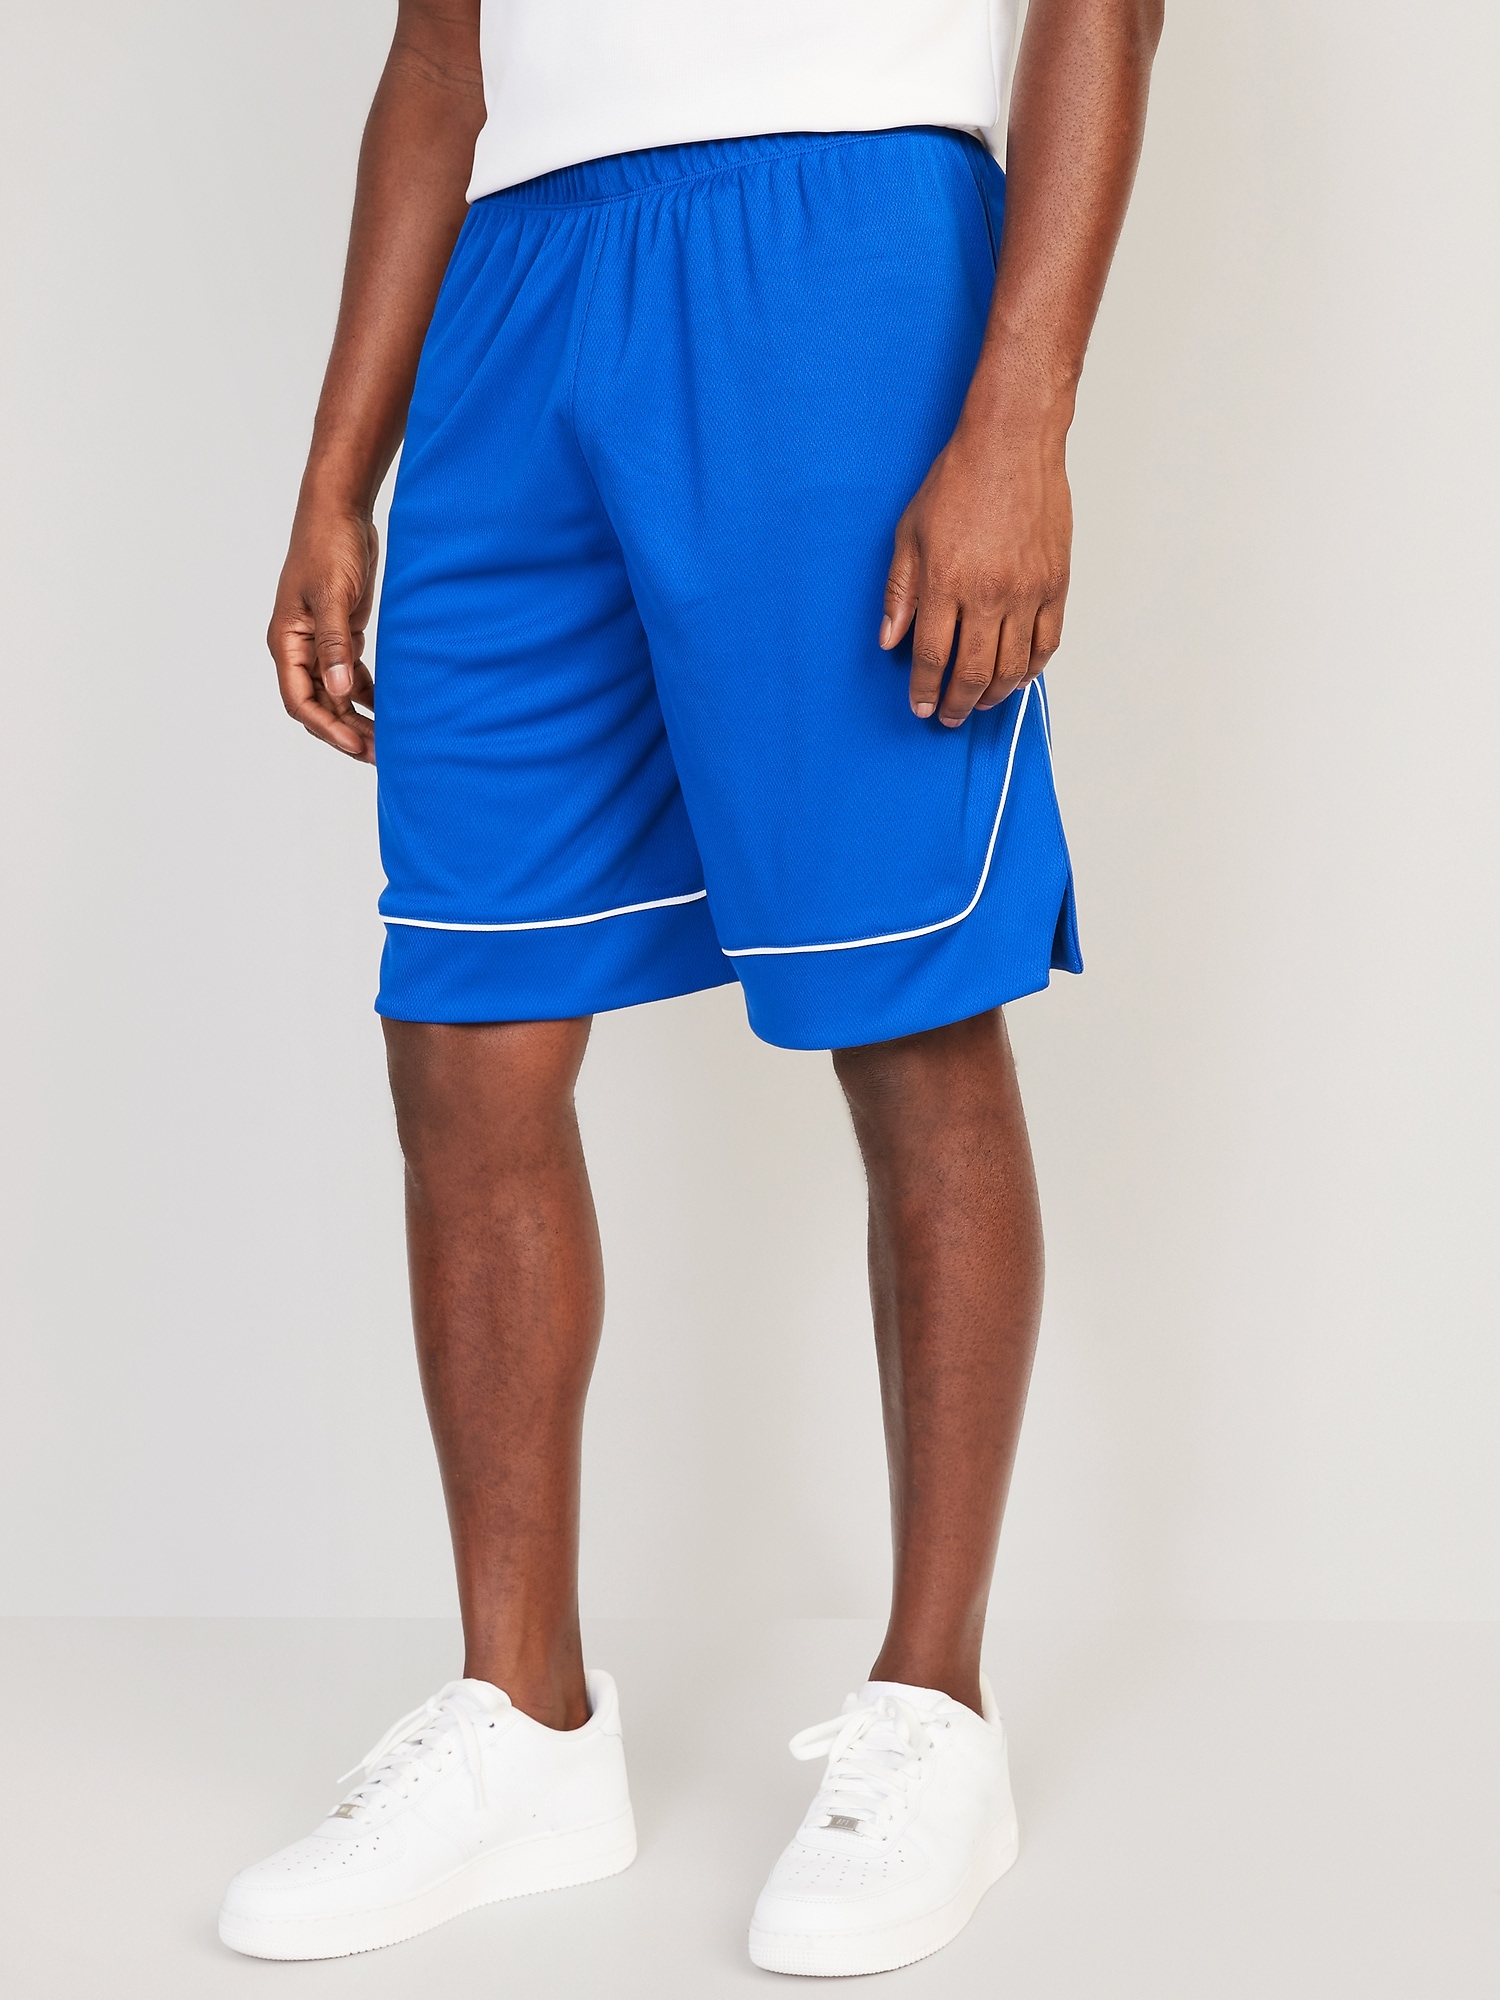 Go-Dry Mesh Basketball Shorts for Men -- 10-inch inseam